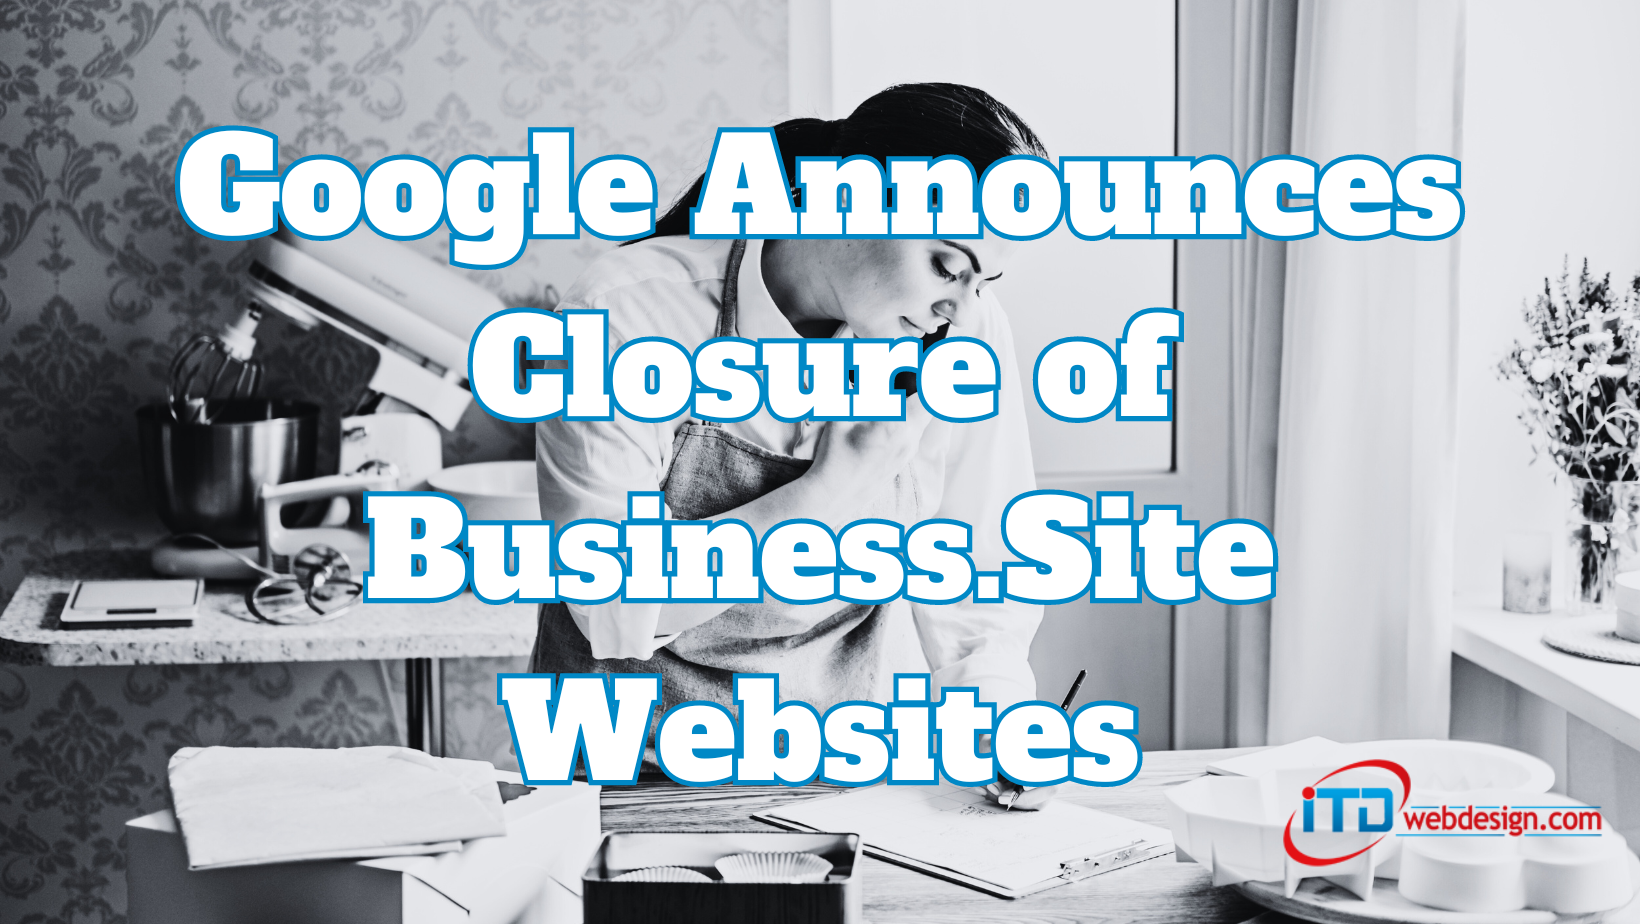 Google Announces Closure of Business.Site Websites - Google Announces Closure of Business.Site Websites